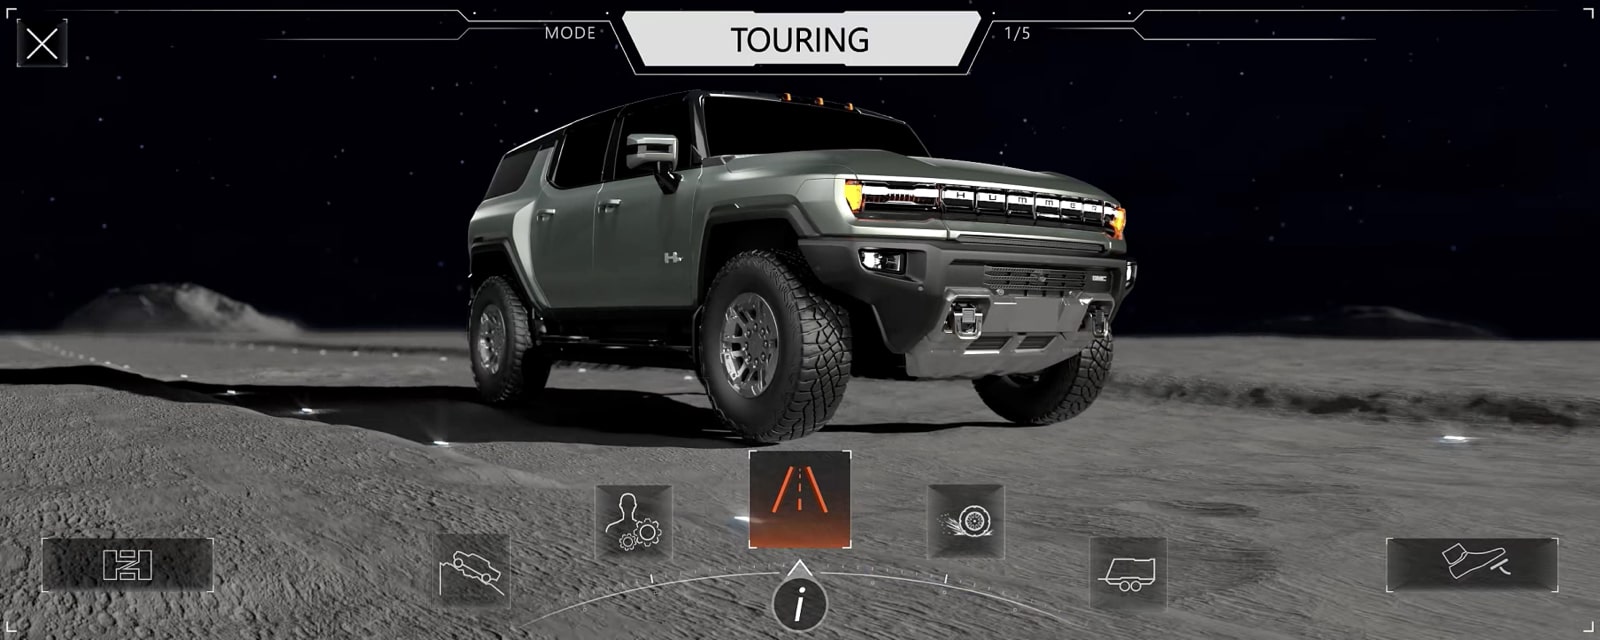 GMC Hummer EV suv touring interface